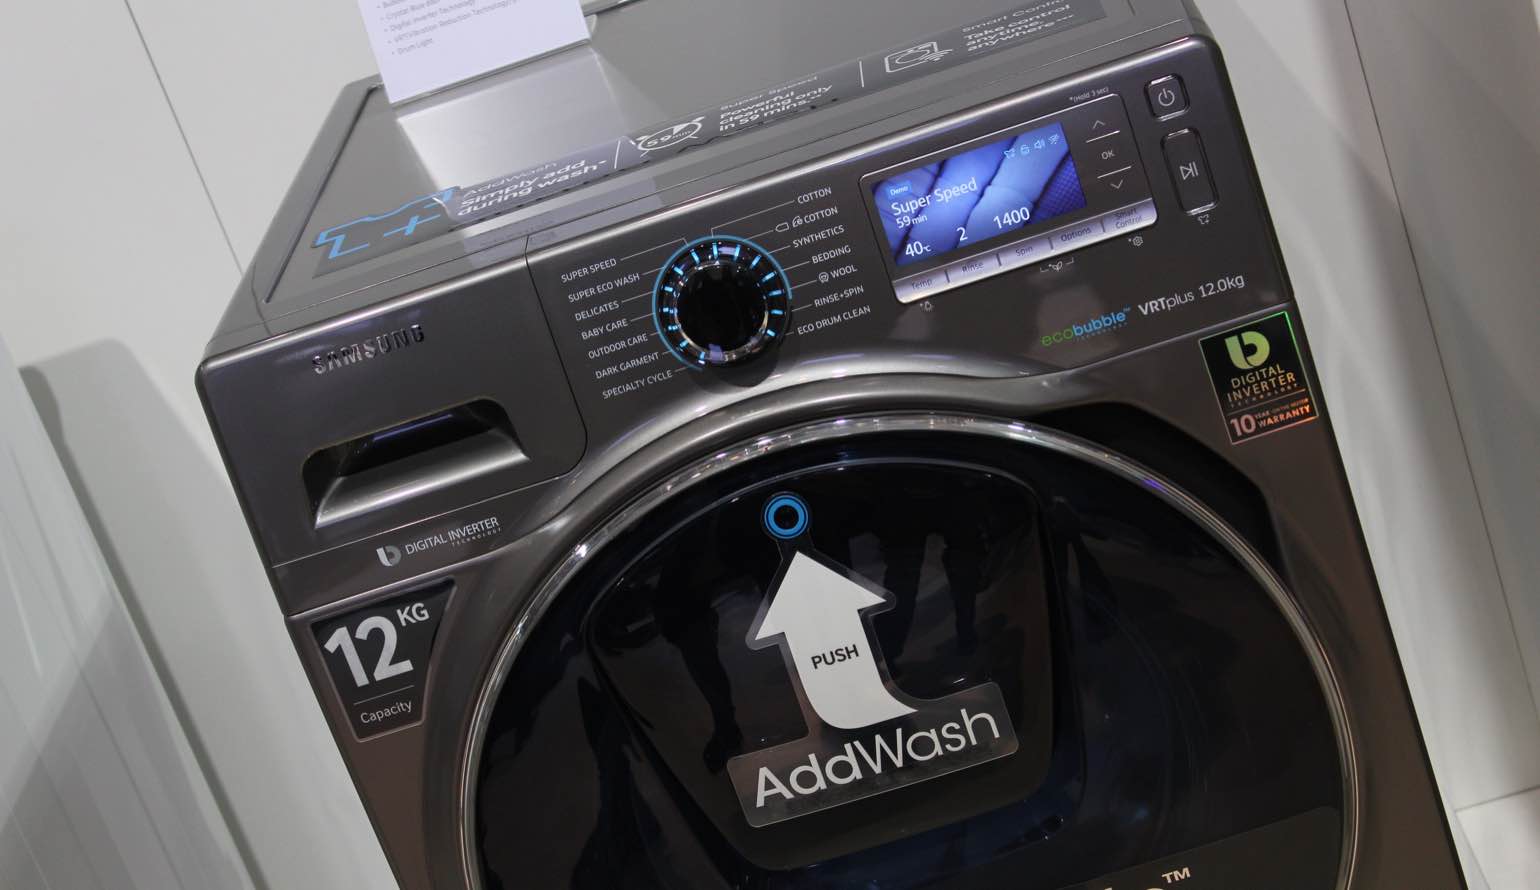 archief Opblazen recept Samsung geeft slimme 'Addwash'-wasmachine een extra deurtje | FWD